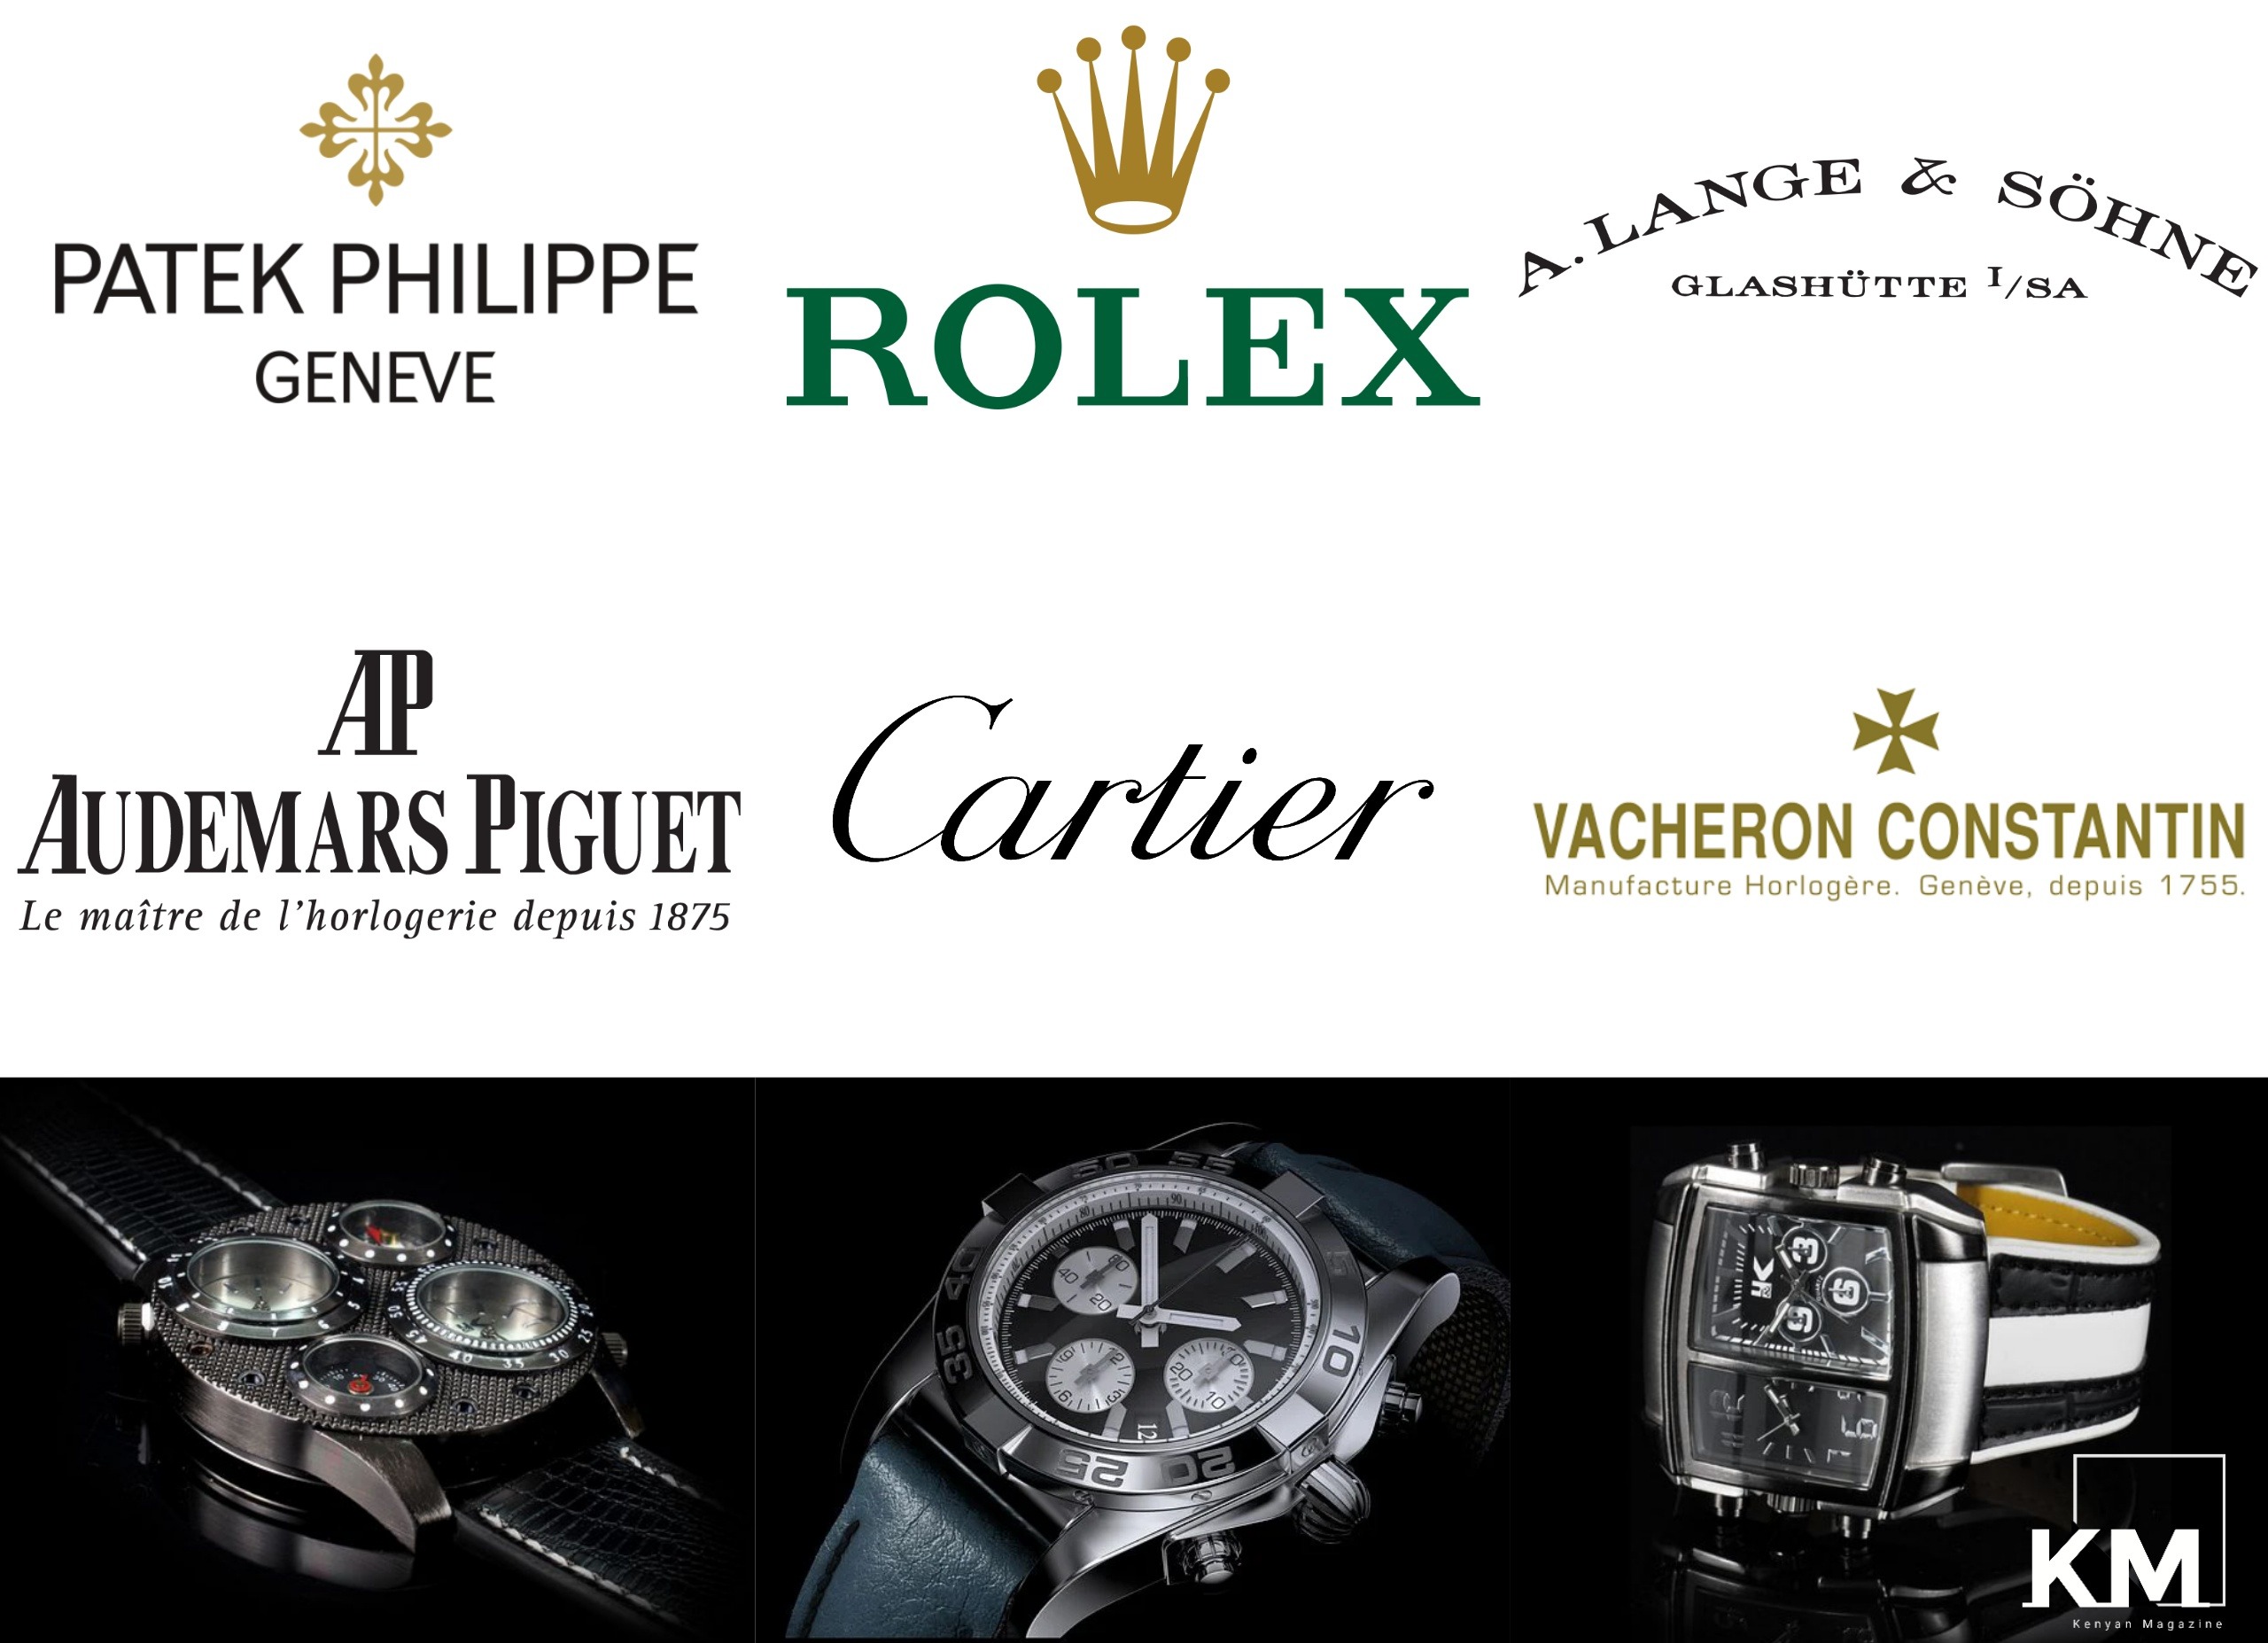 Most Luxurious watch brands